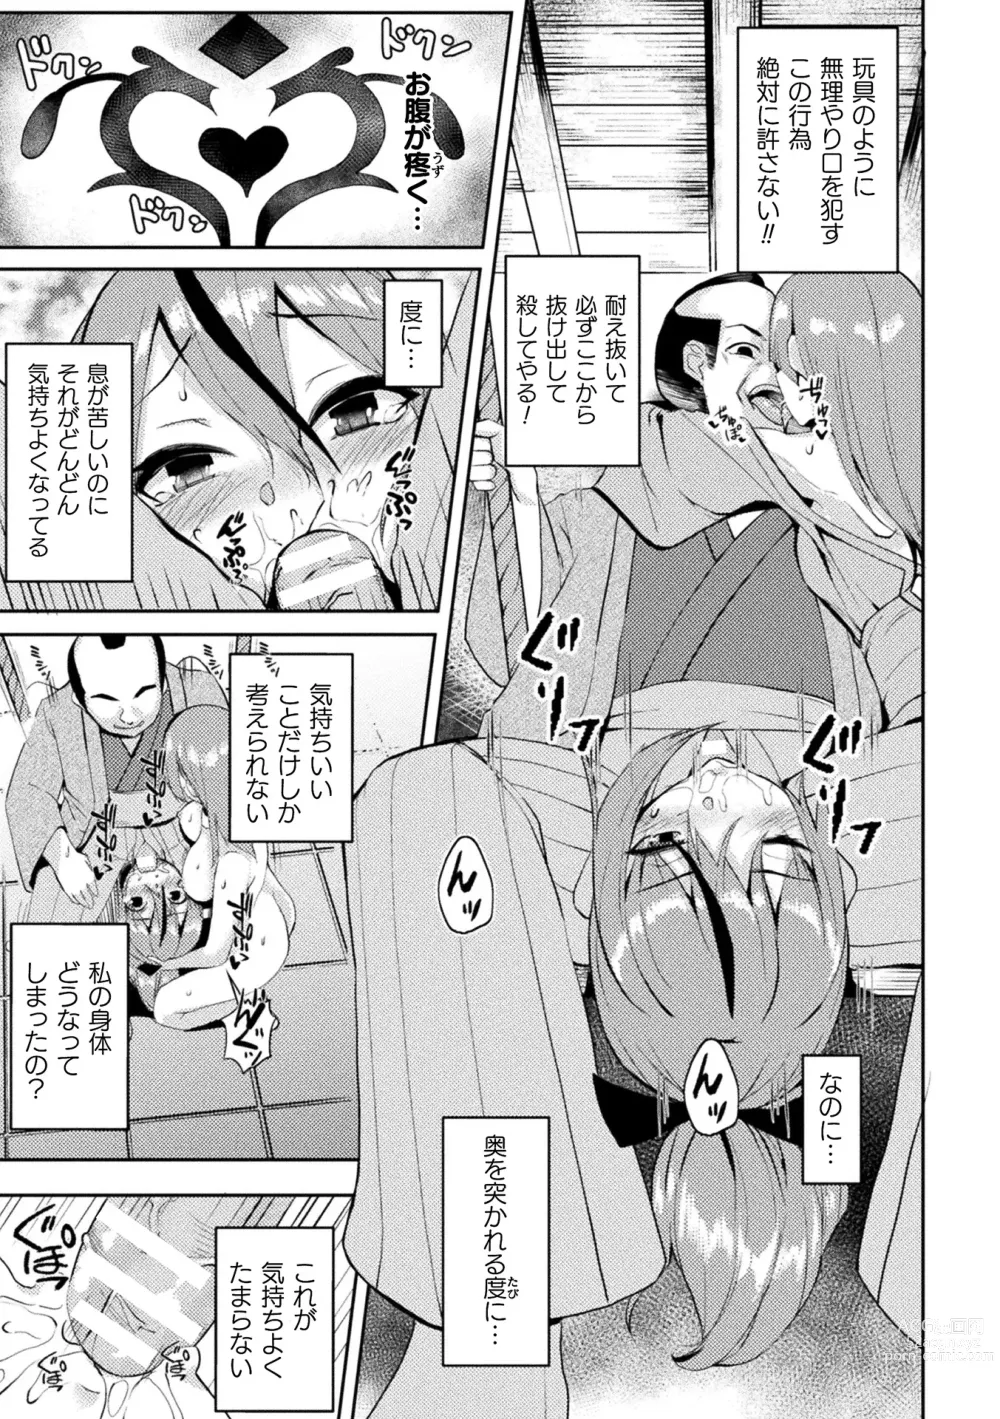 Page 75 of manga 2D Comic Magazine Akuochi Haramase Seigi no Bishoujo Akuten Jutai Vol. 2